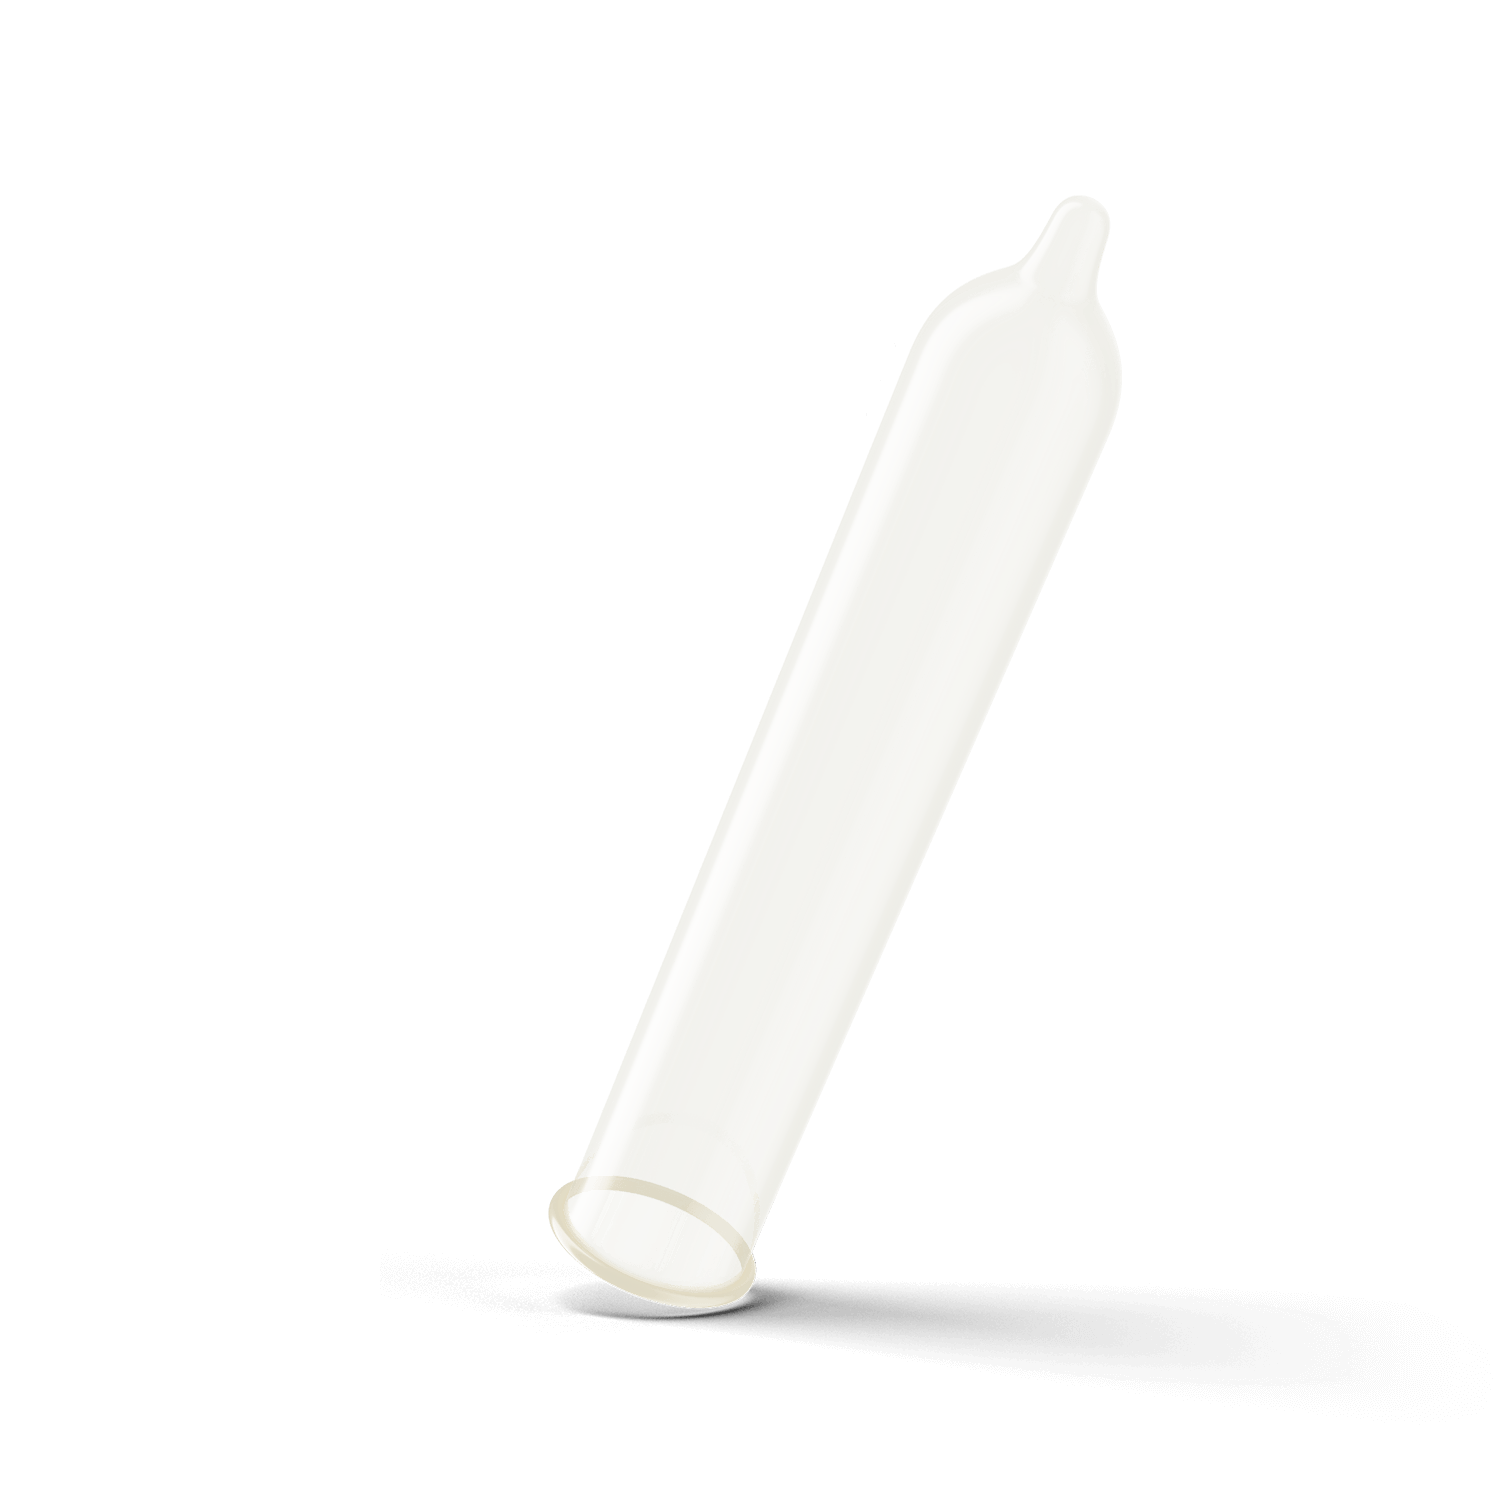 Trojan Bareskin Raw thin condom with straight shape and reservoir tip.